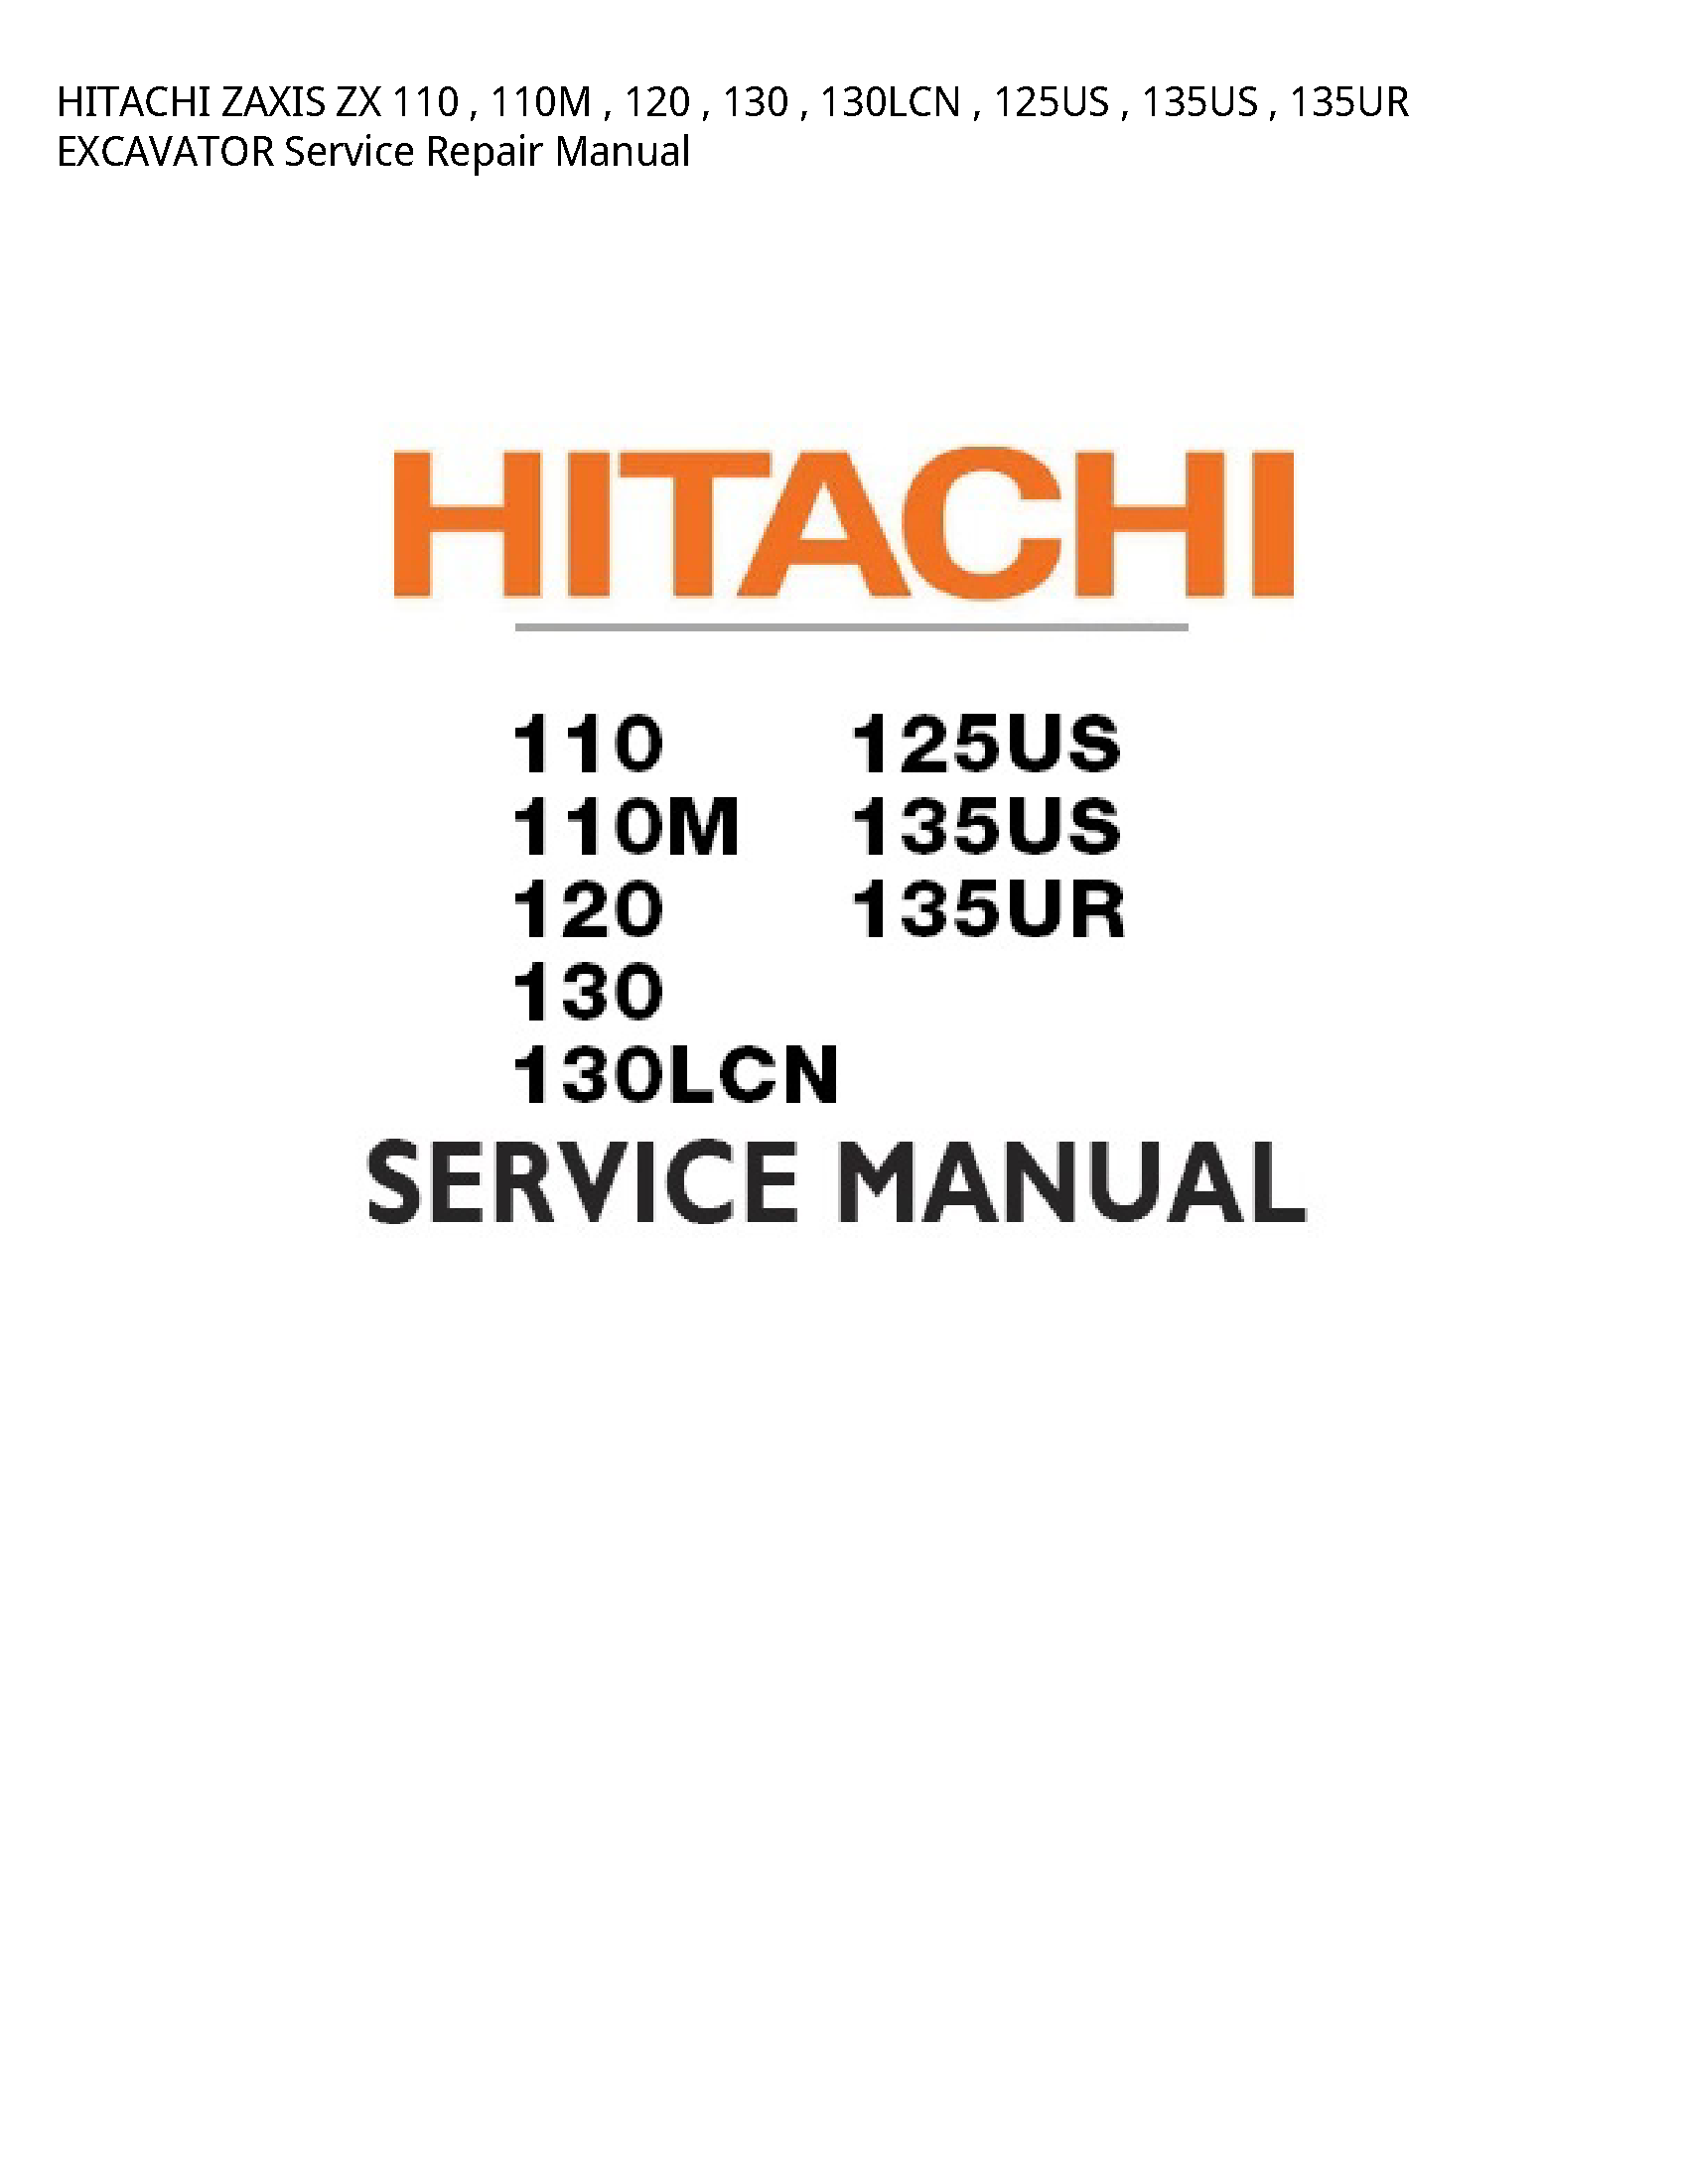 Hitachi 110 ZAXIS ZX EXCAVATOR manual